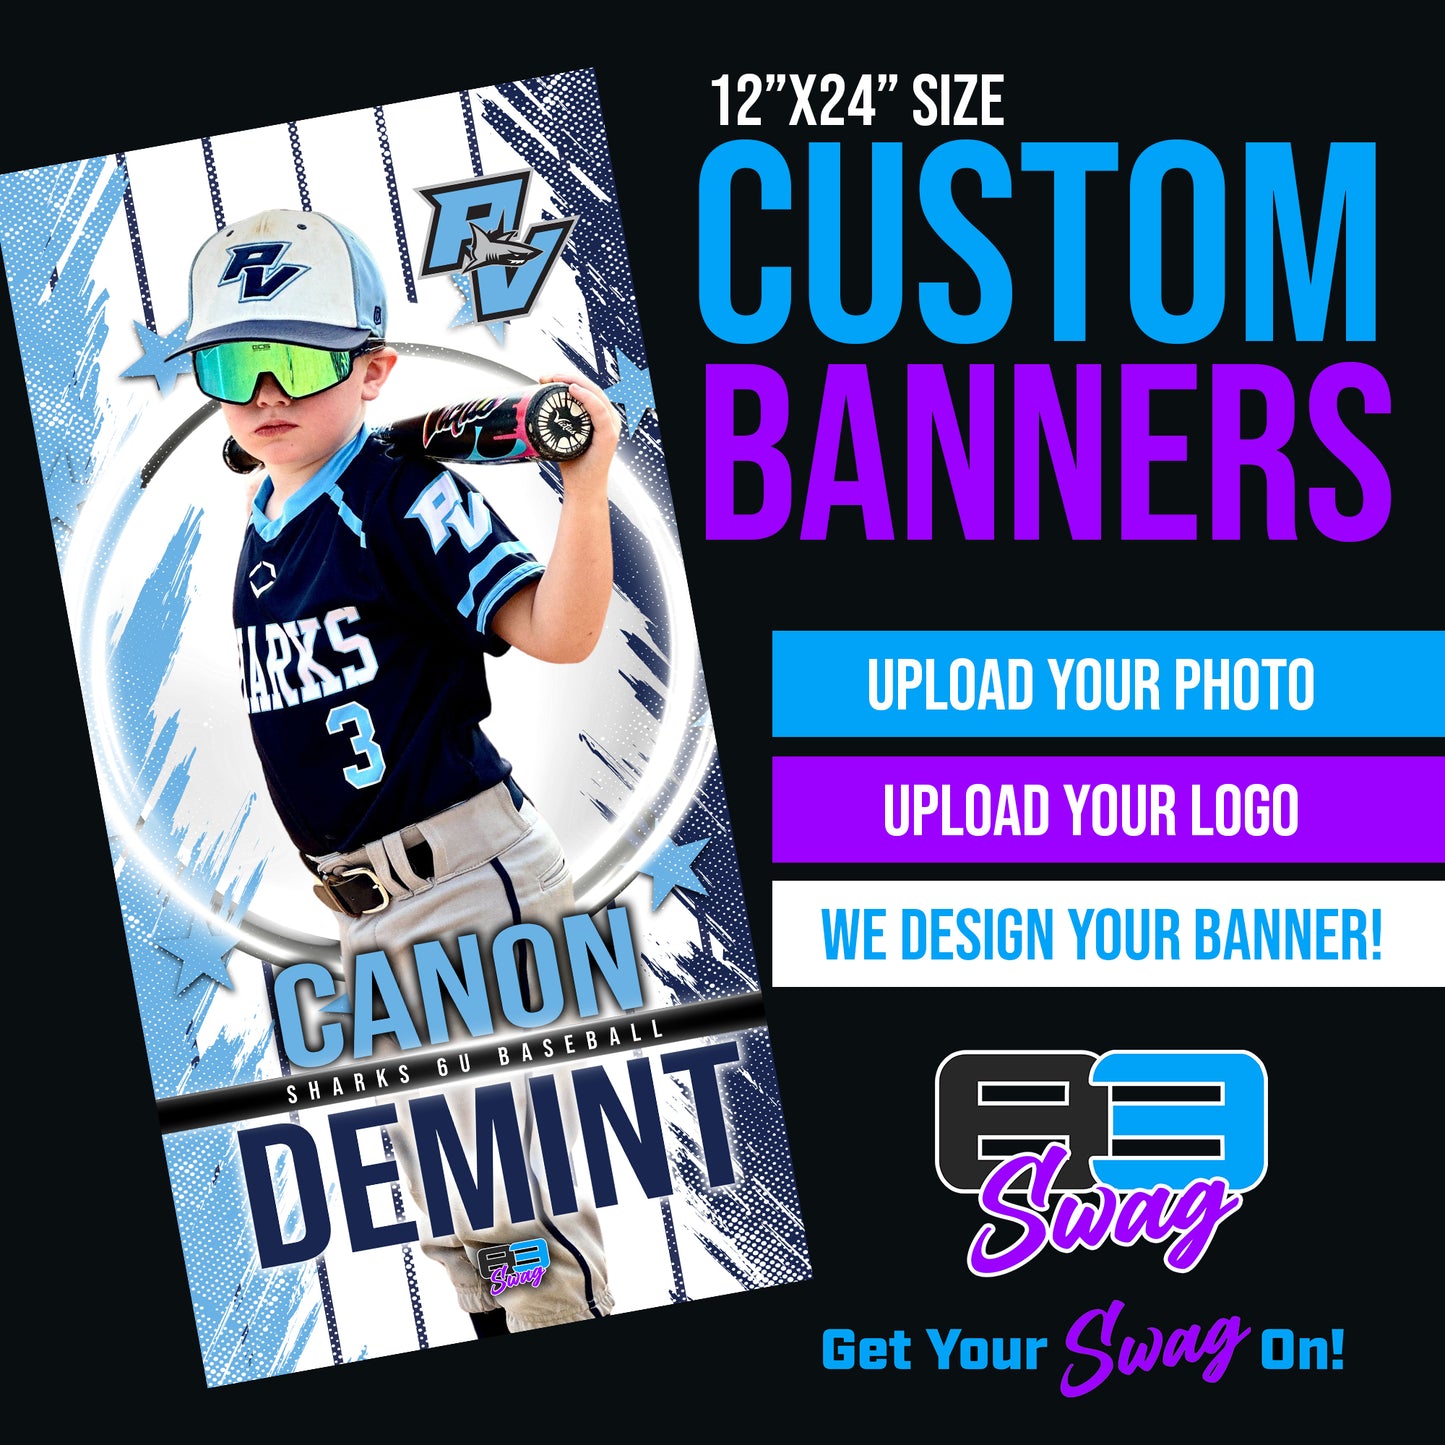 Custom 12"x24" Player Banners